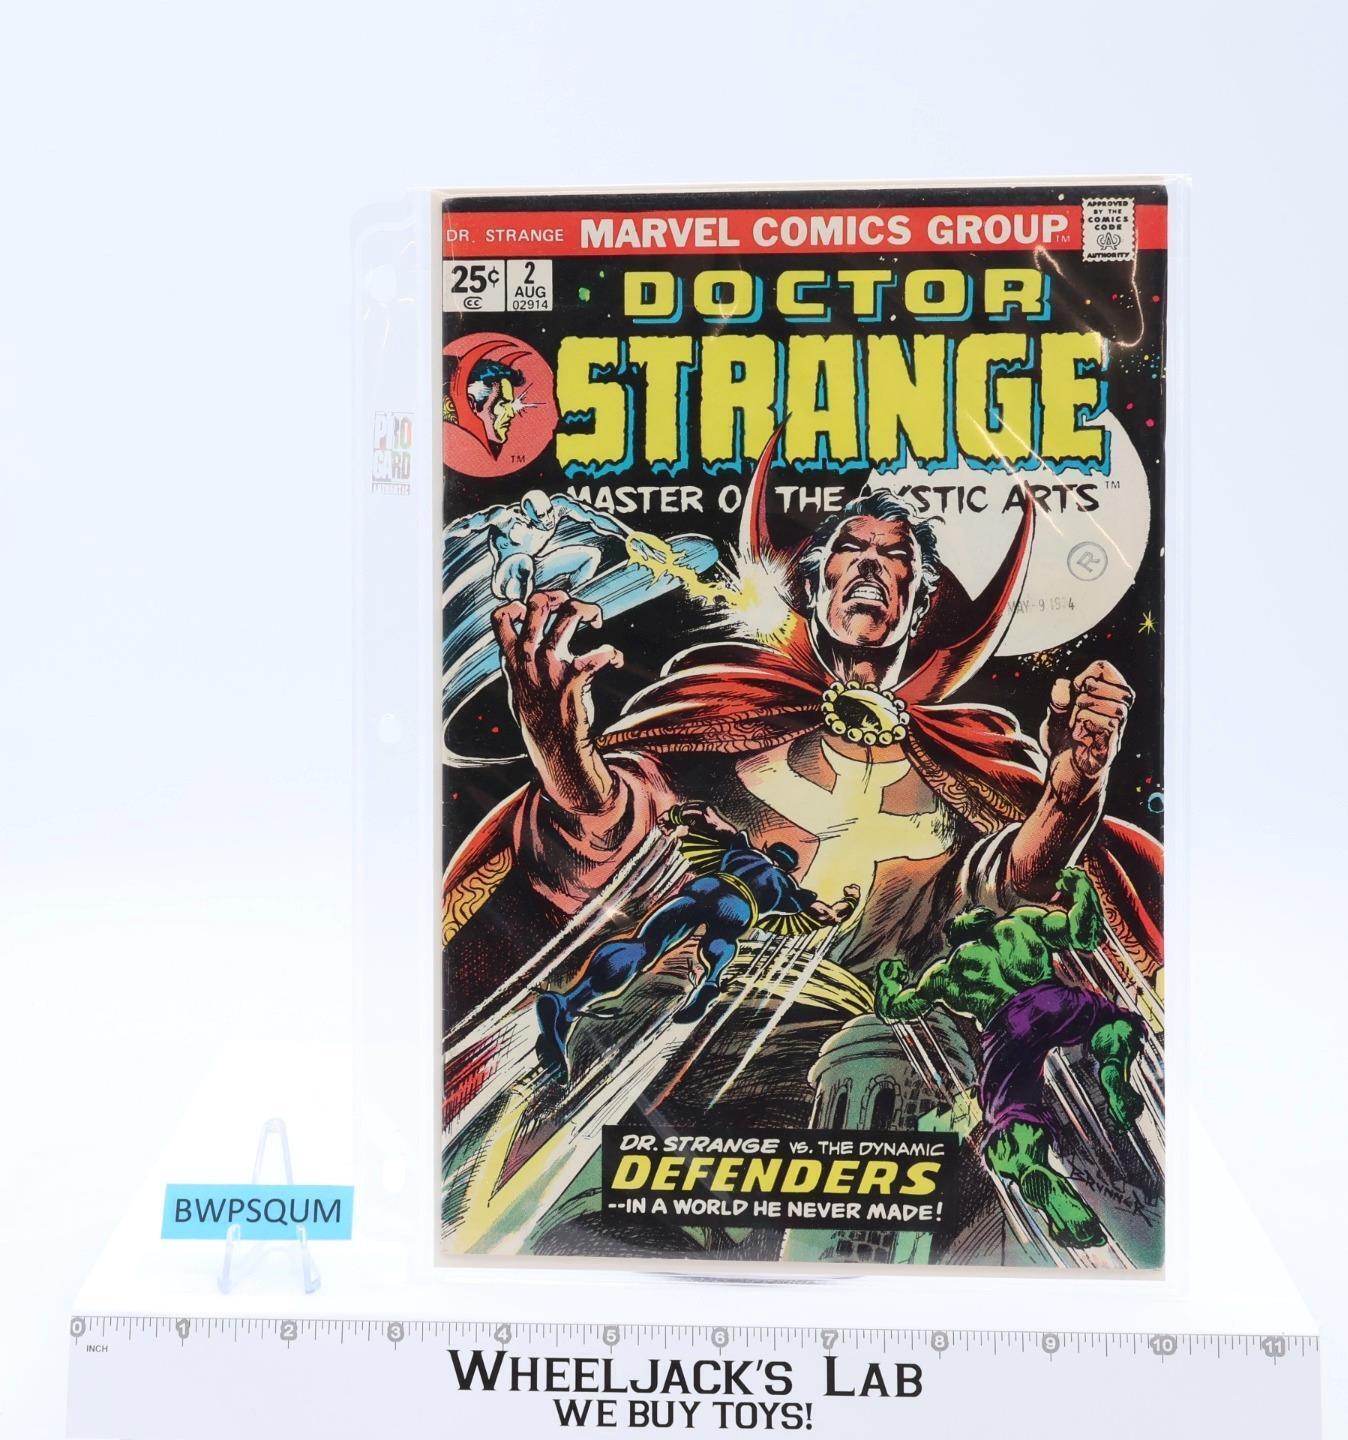 Doctor Strange vs The Defenders #2 1974 Marvel Comics Master of the Mystic Arts